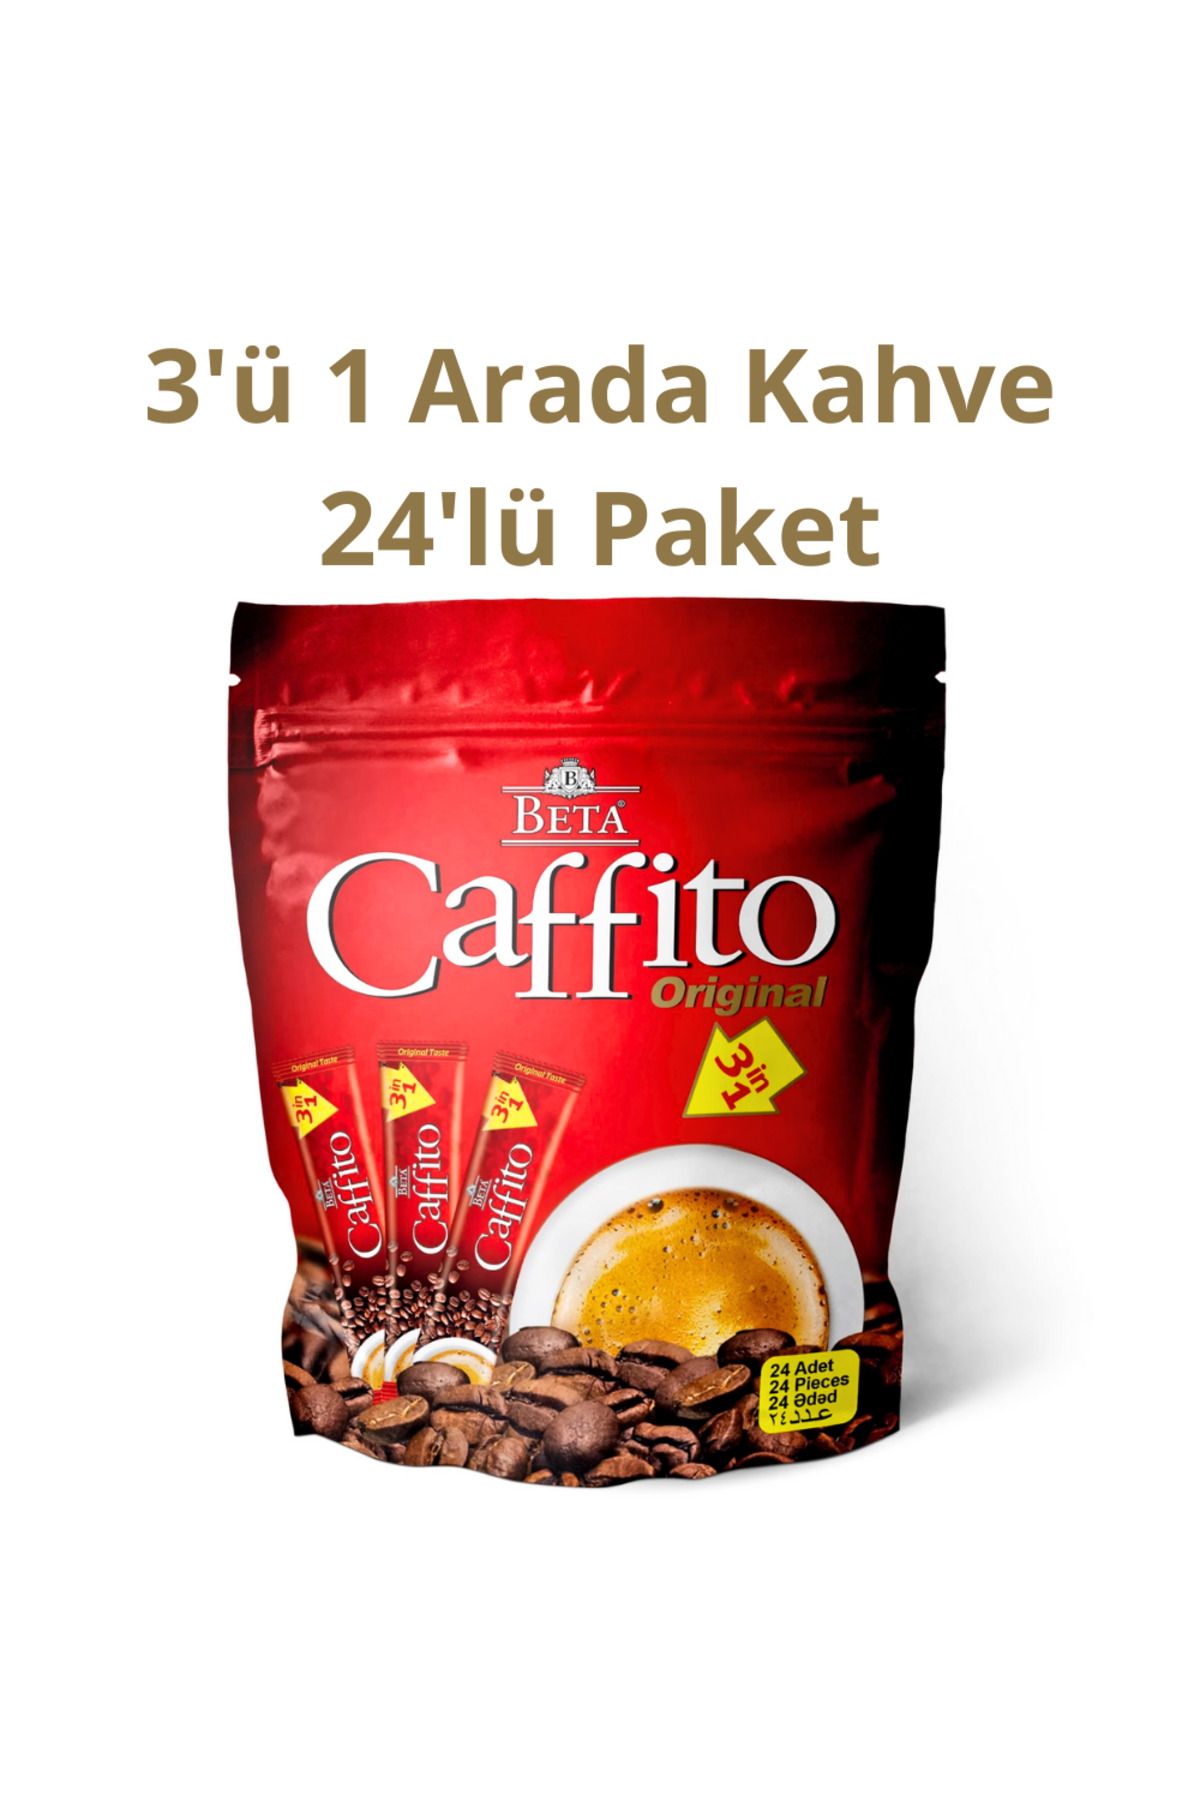 Beta Caffito 3 in 1 Classic Kahve 18 gram 24'lü Paket (3 ü 1 Arada Kahve)